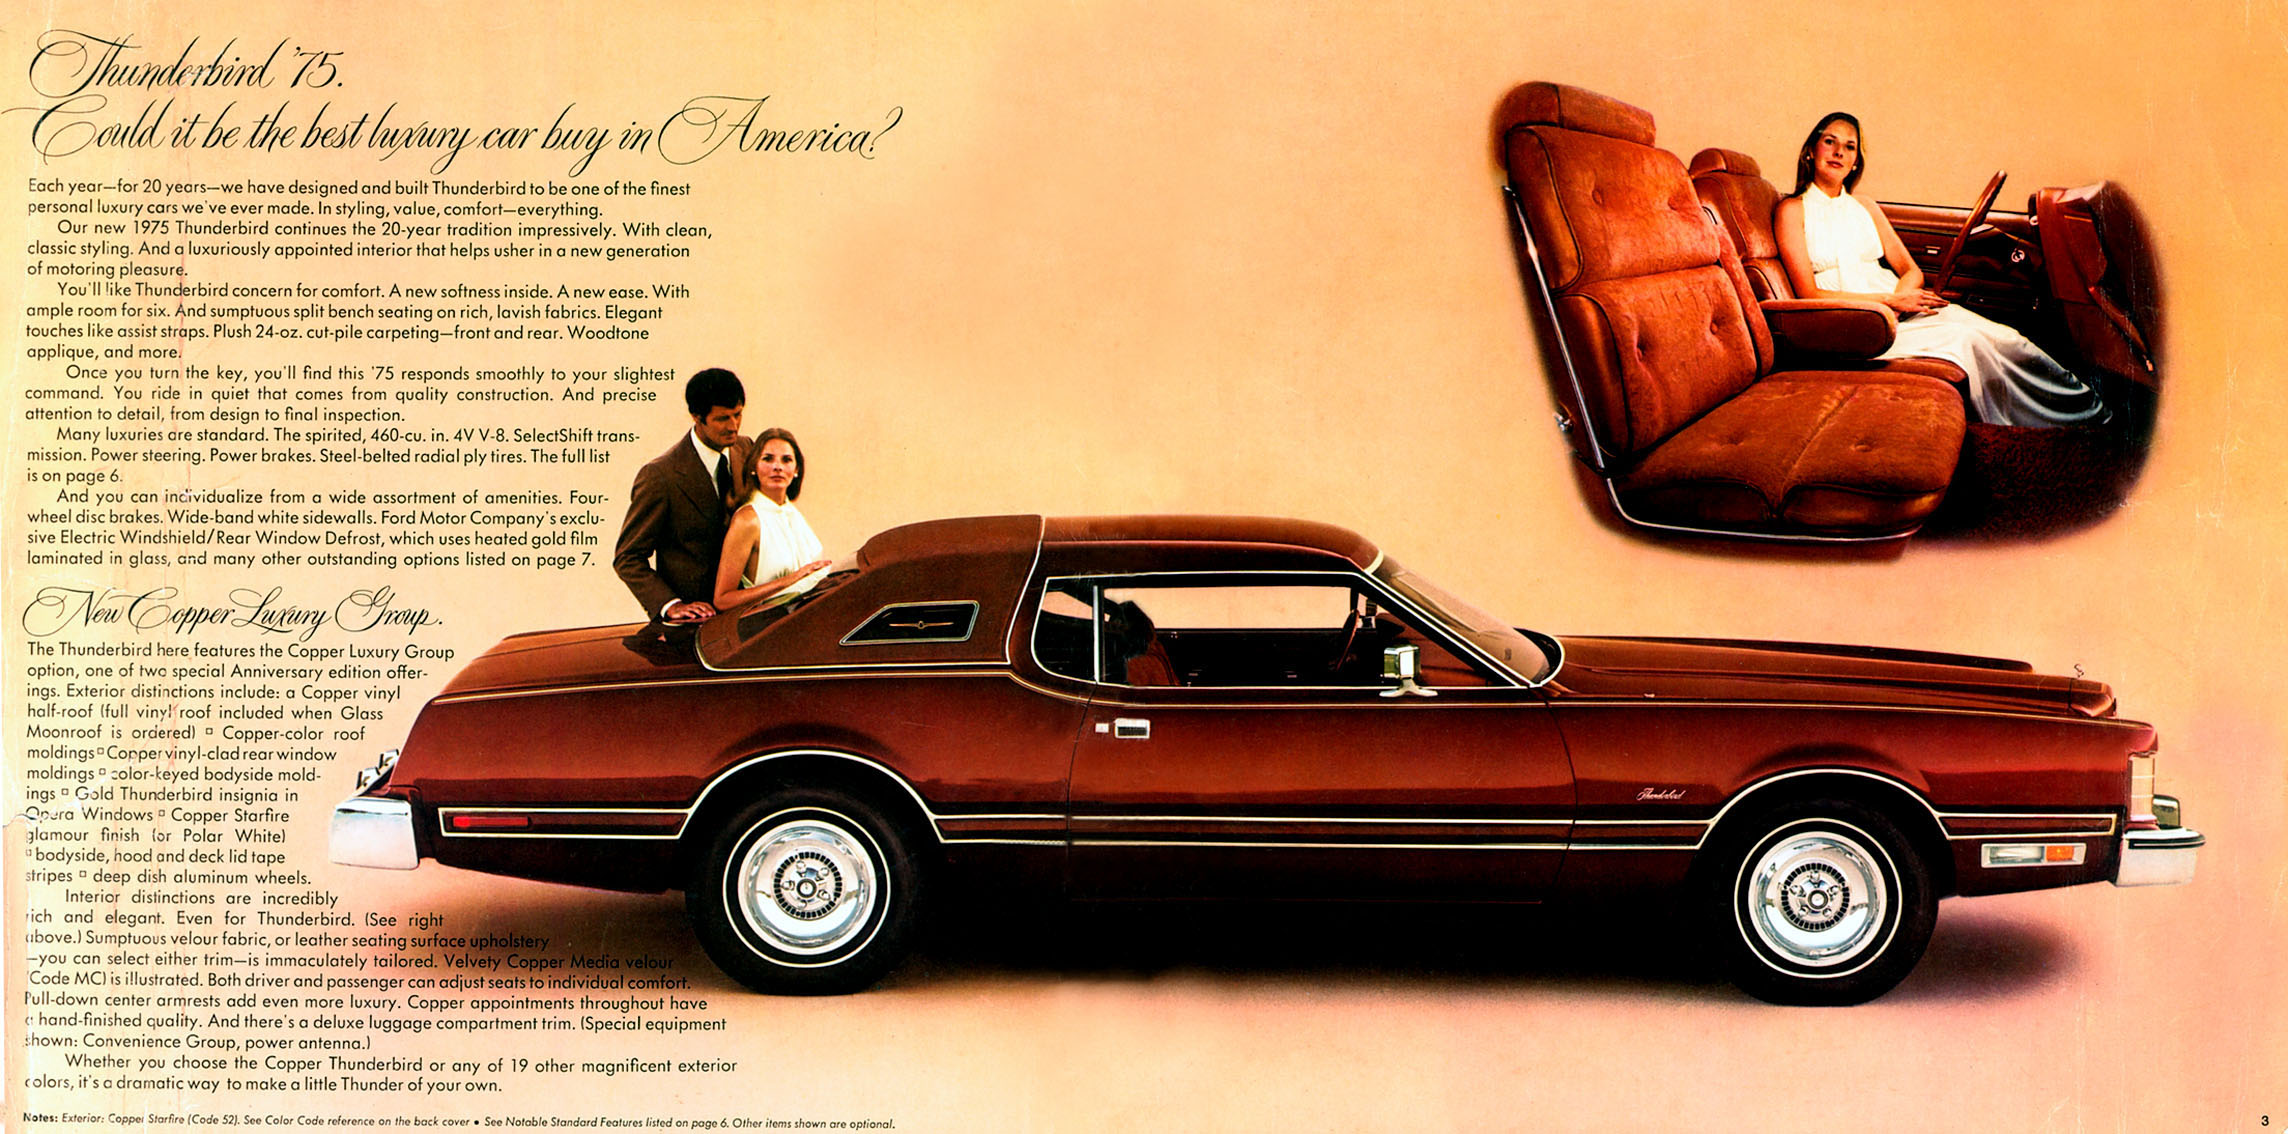 1975 Ford Thunderbird 20th Anniversary Edition Jade Luxury Group Sales Brochure